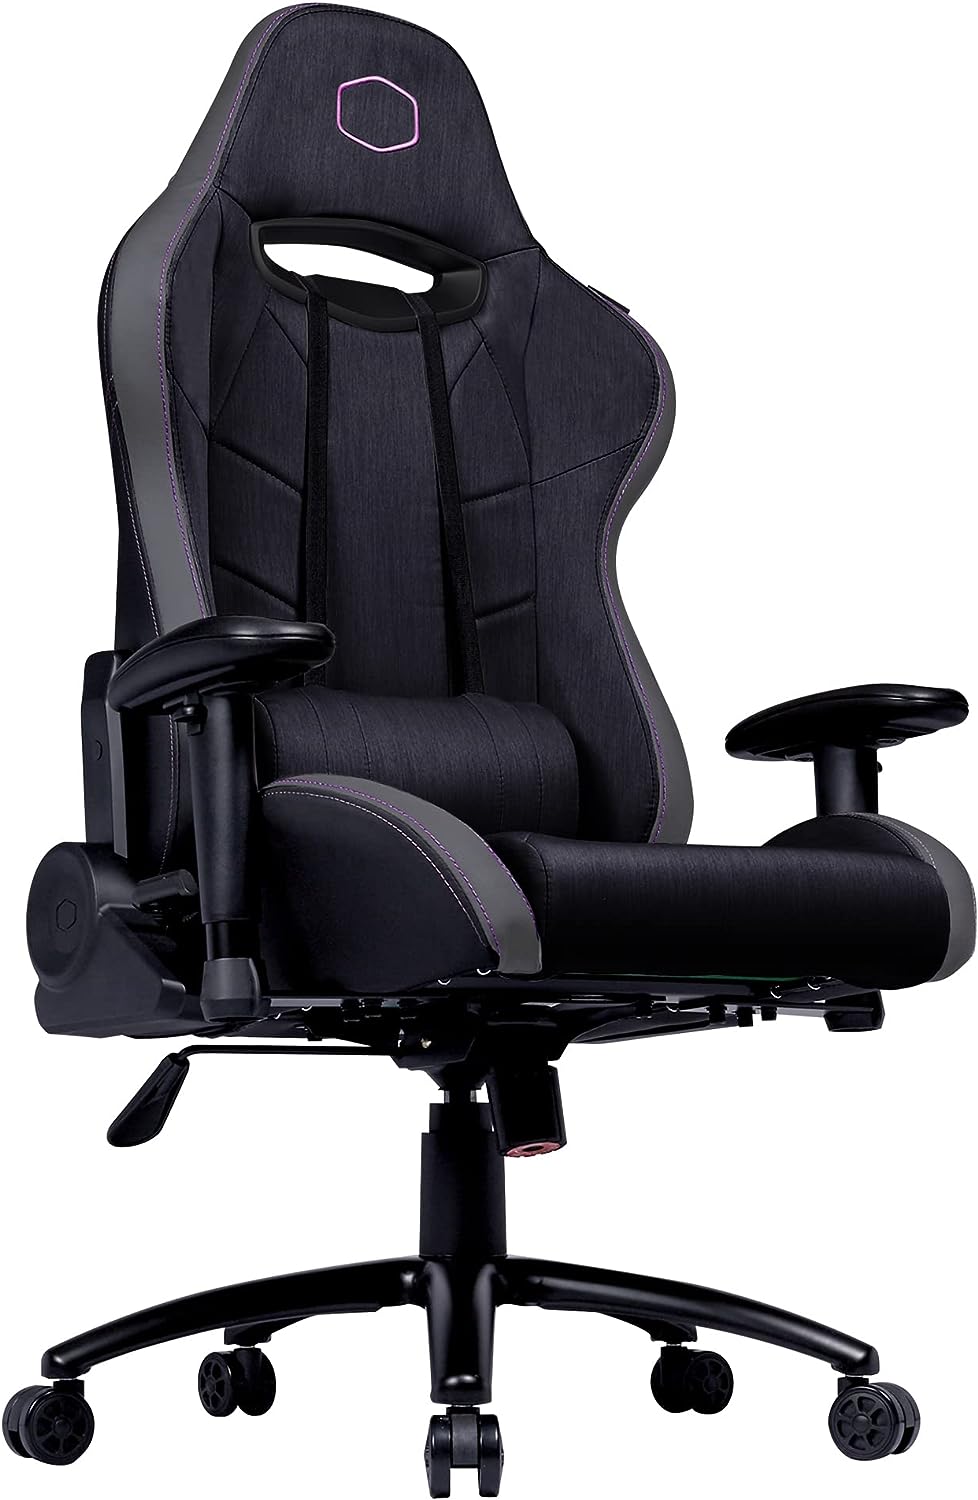 Cooler Master Caliber R2C Gaming Chair